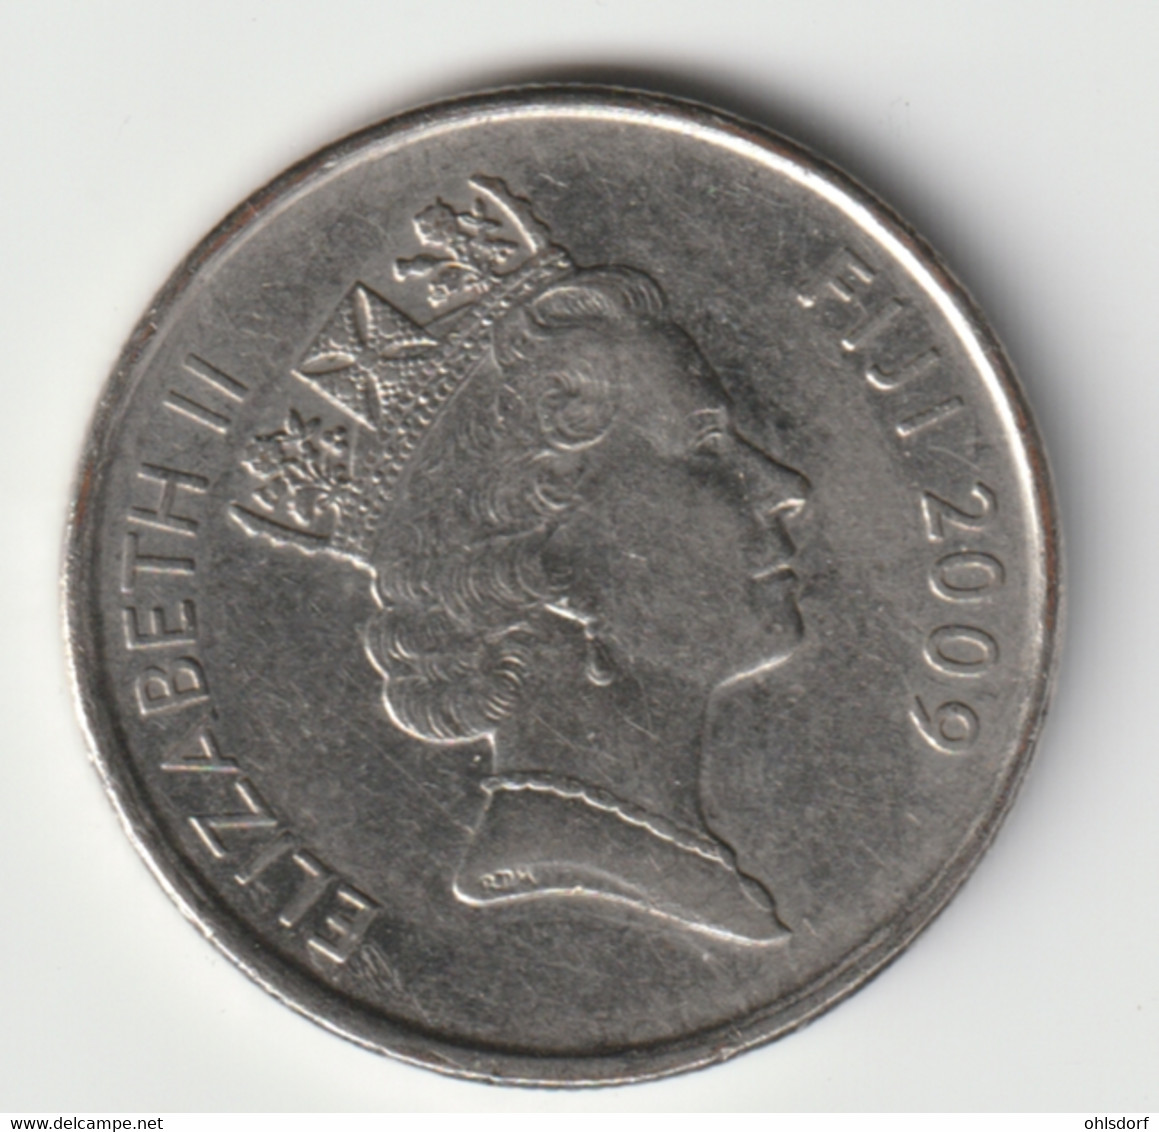 FIJI 2009: 20 Cents, KM 121 - Fiji